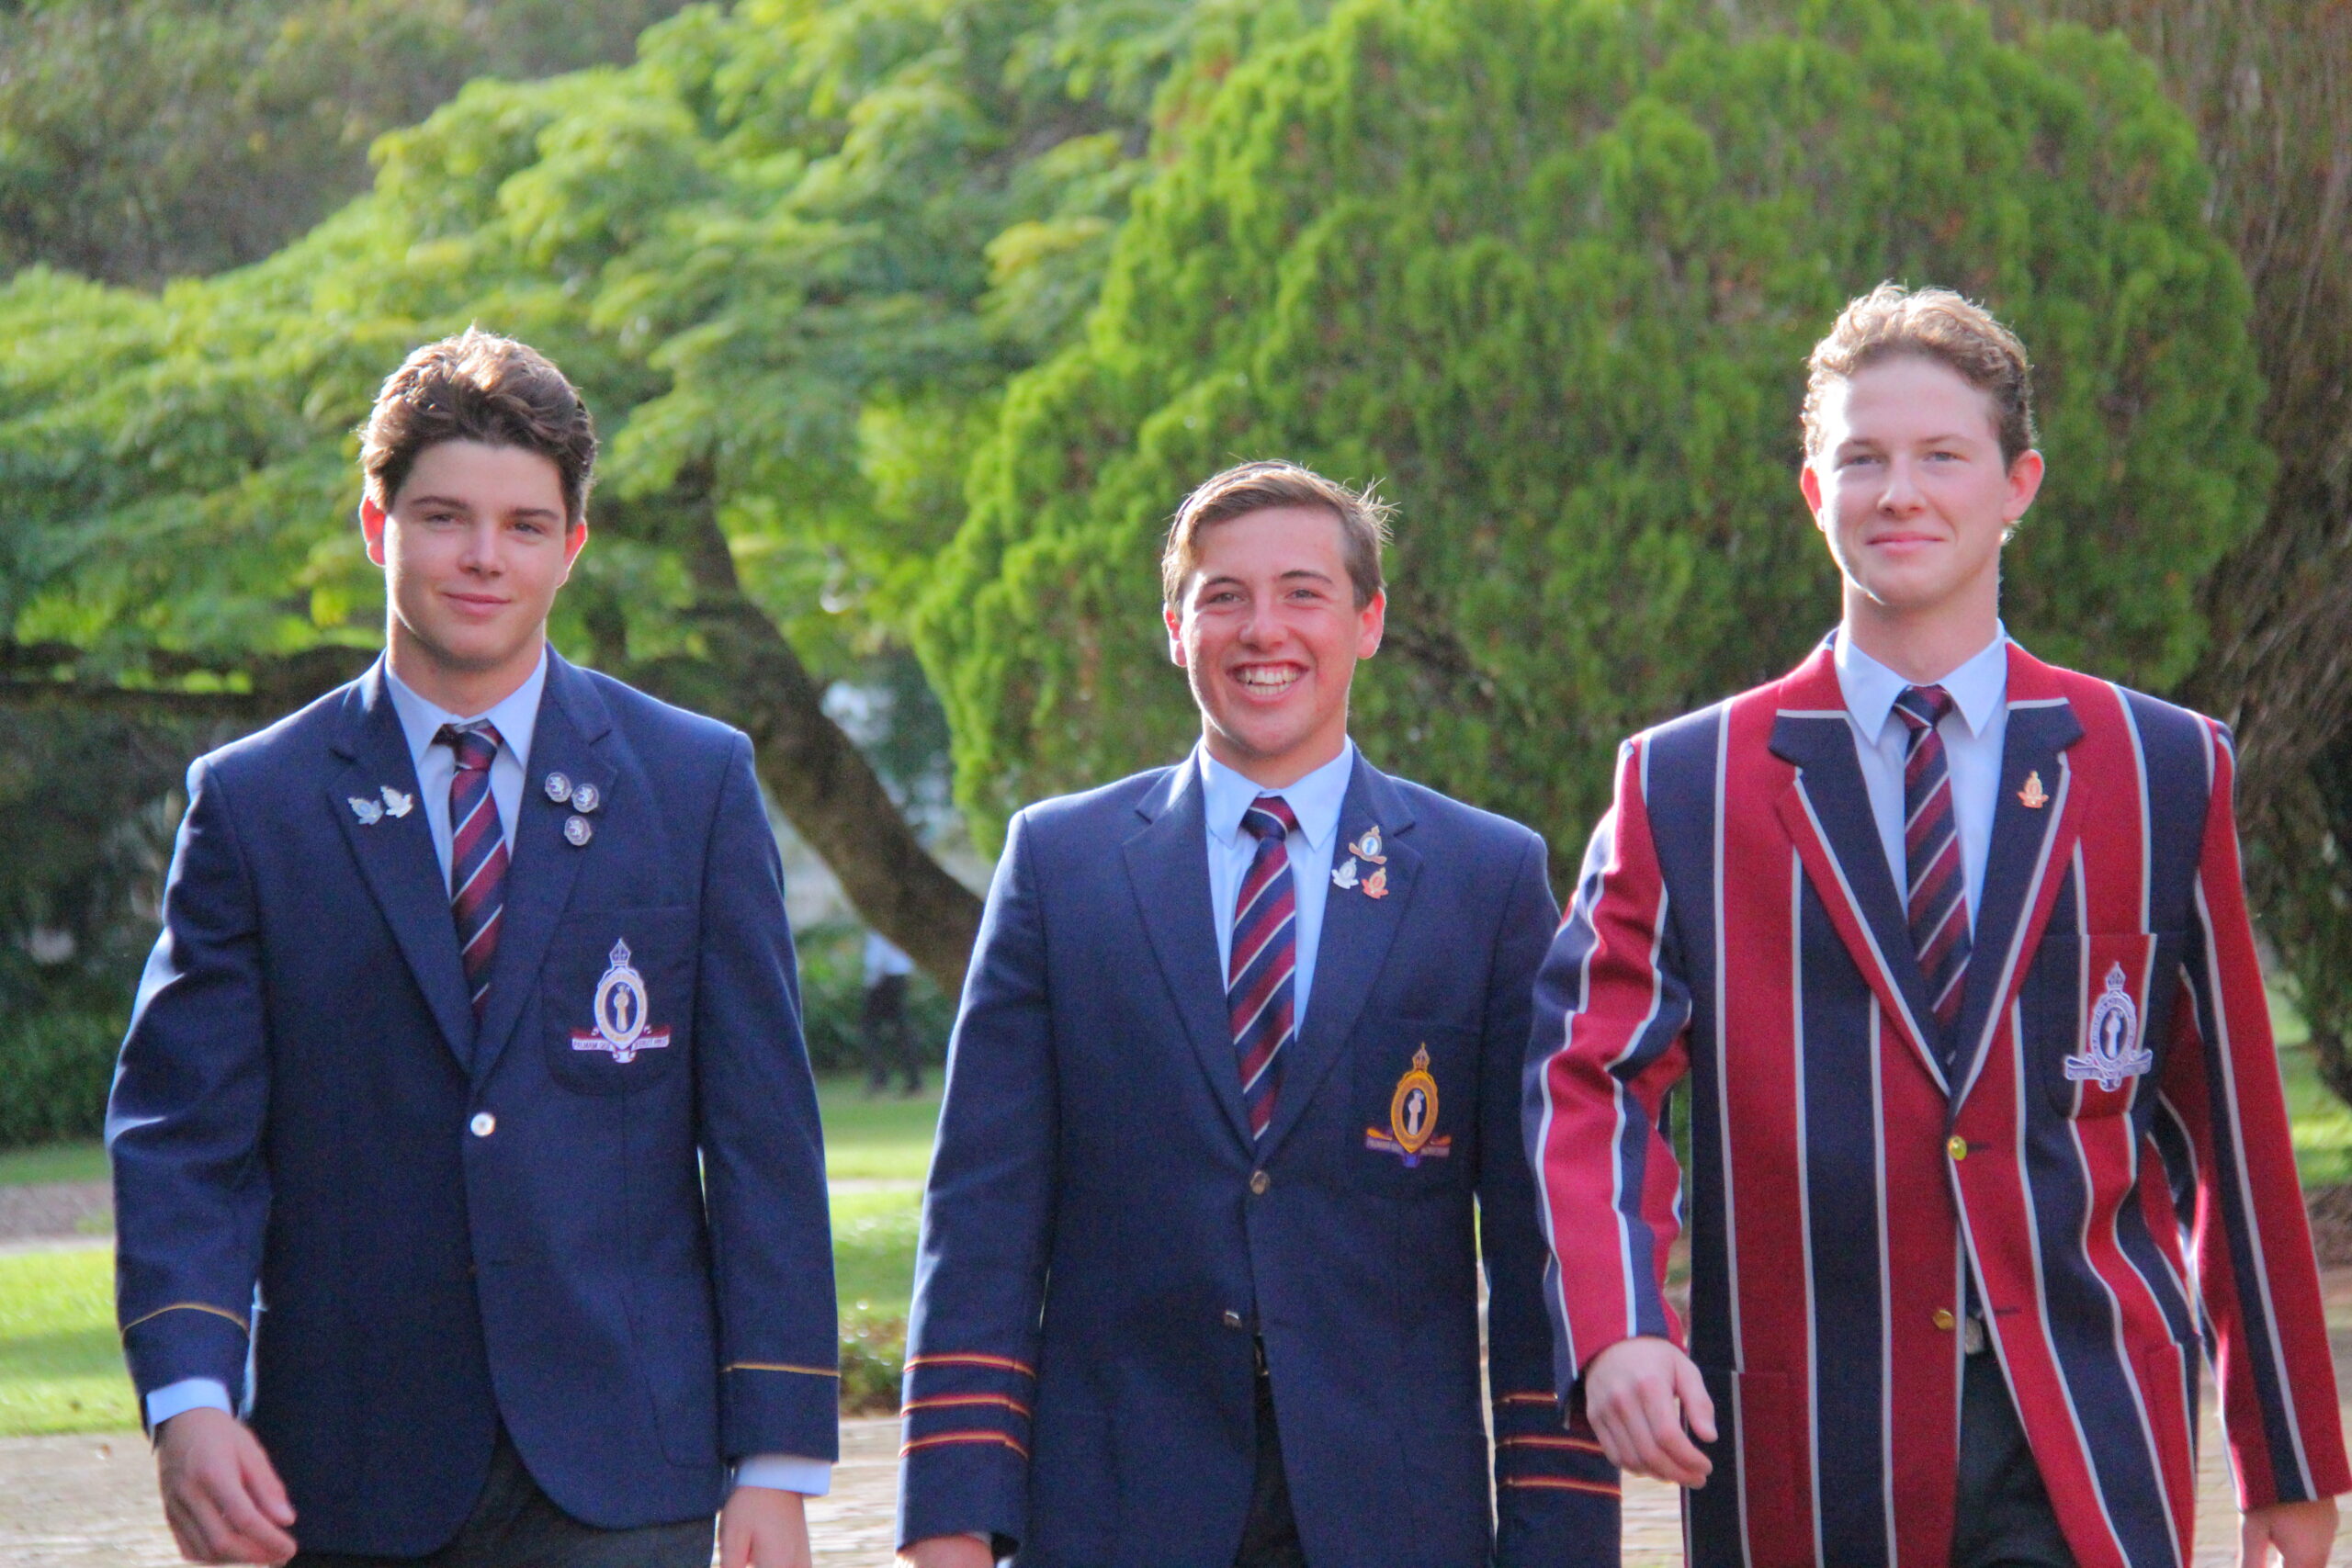 Wee Waa and Burren boys shine bright in high school leadership roles